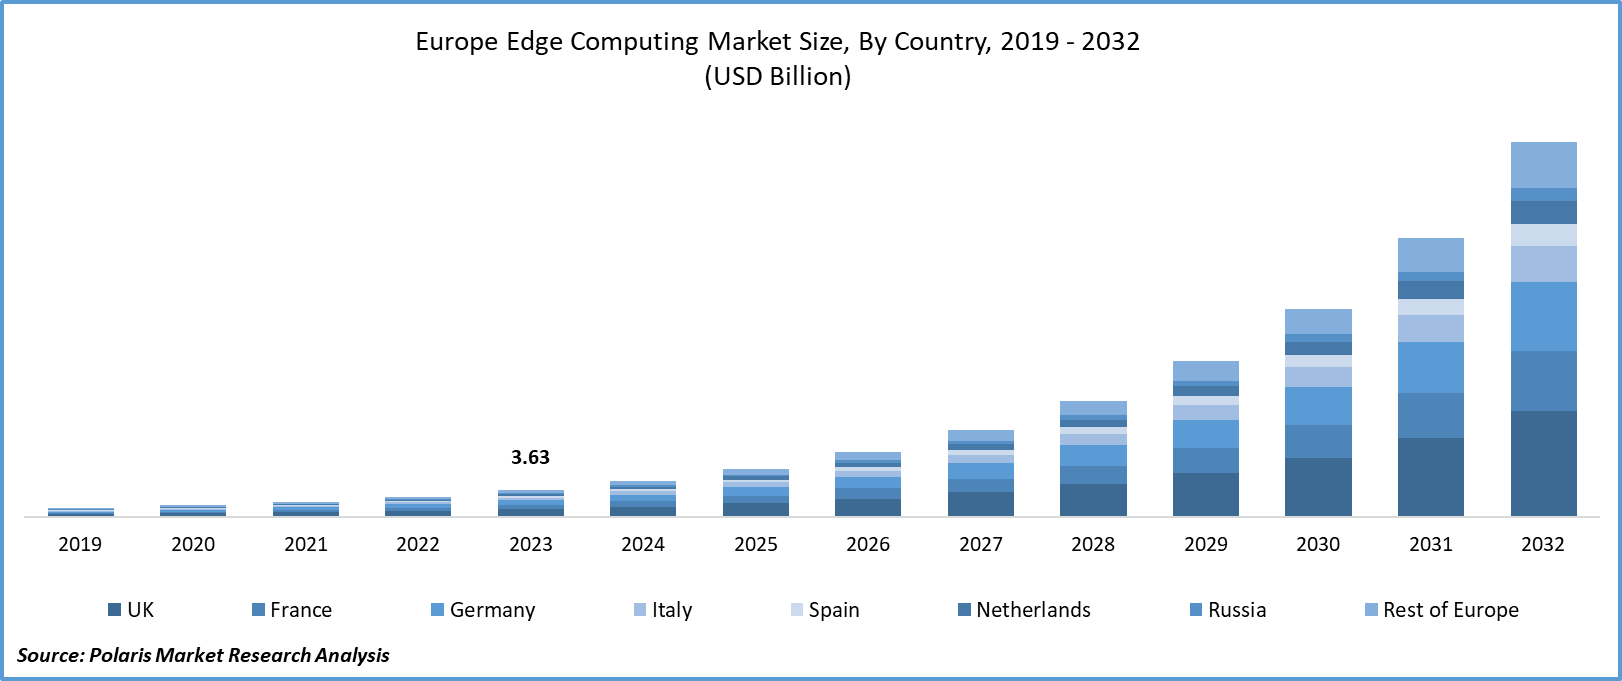 Europe Edge Computing Market Size